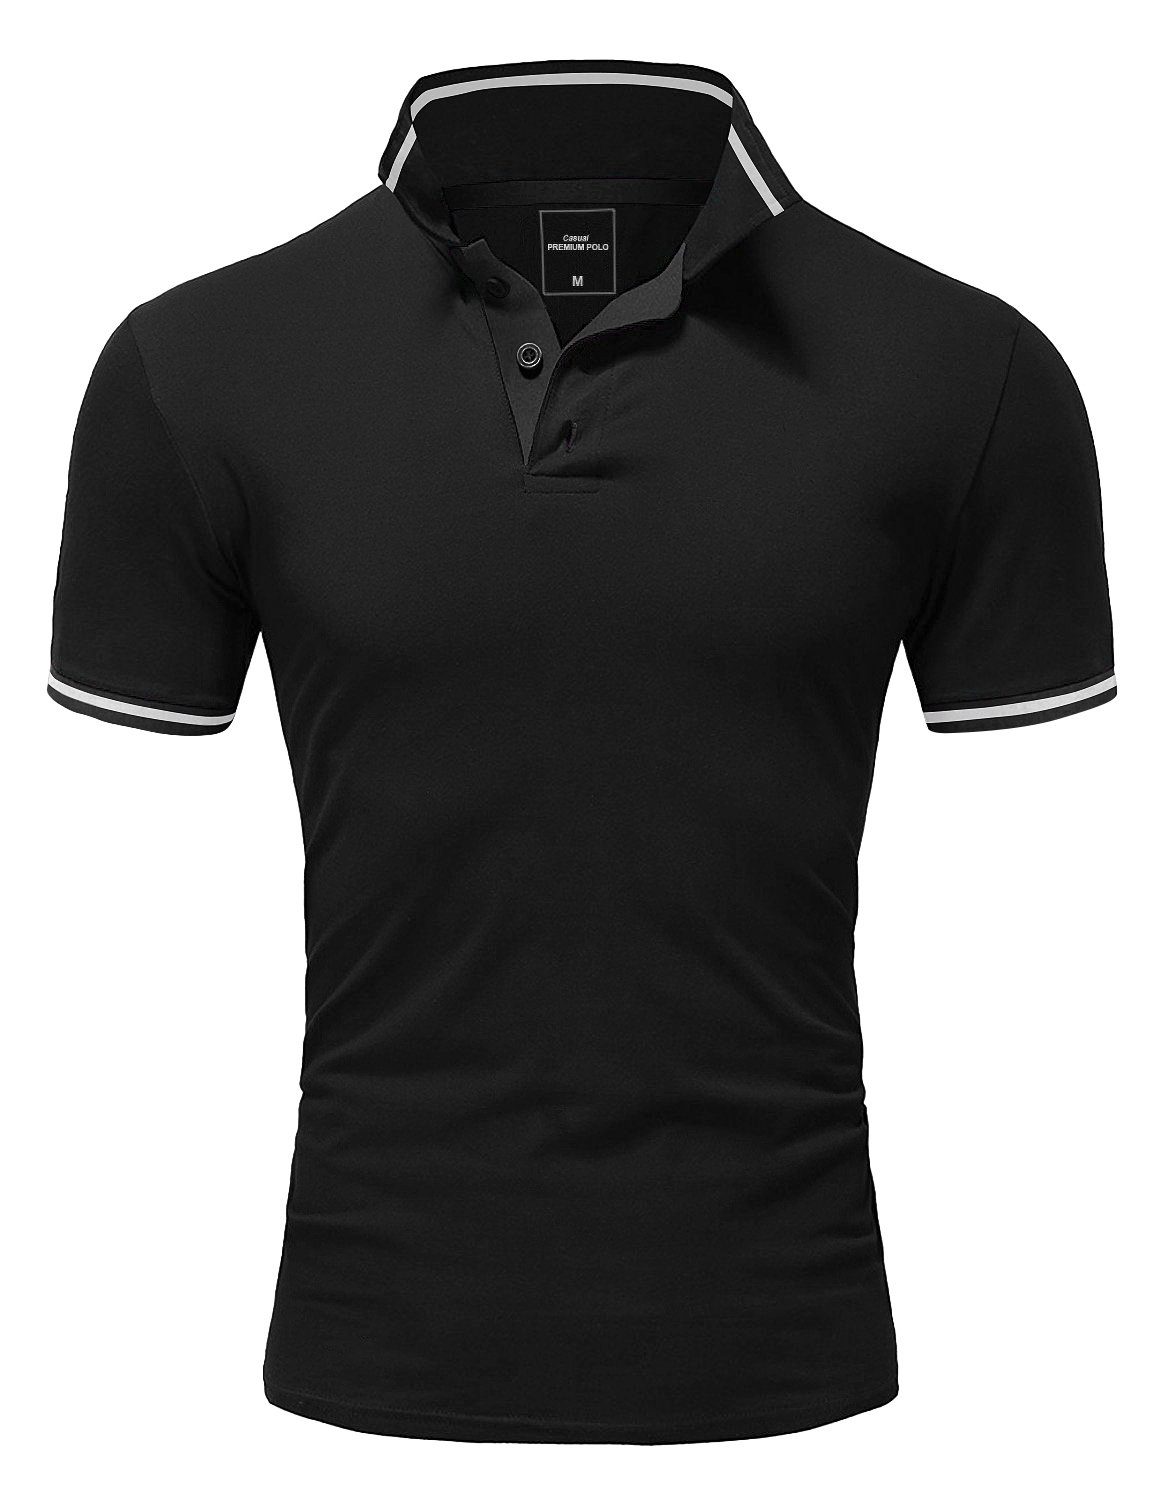 T-Shirt Kurzarm Kontrast Schwarz/Weiß Poloshirt PROVIDENCE Basic Amaci&Sons Polohemd Herren